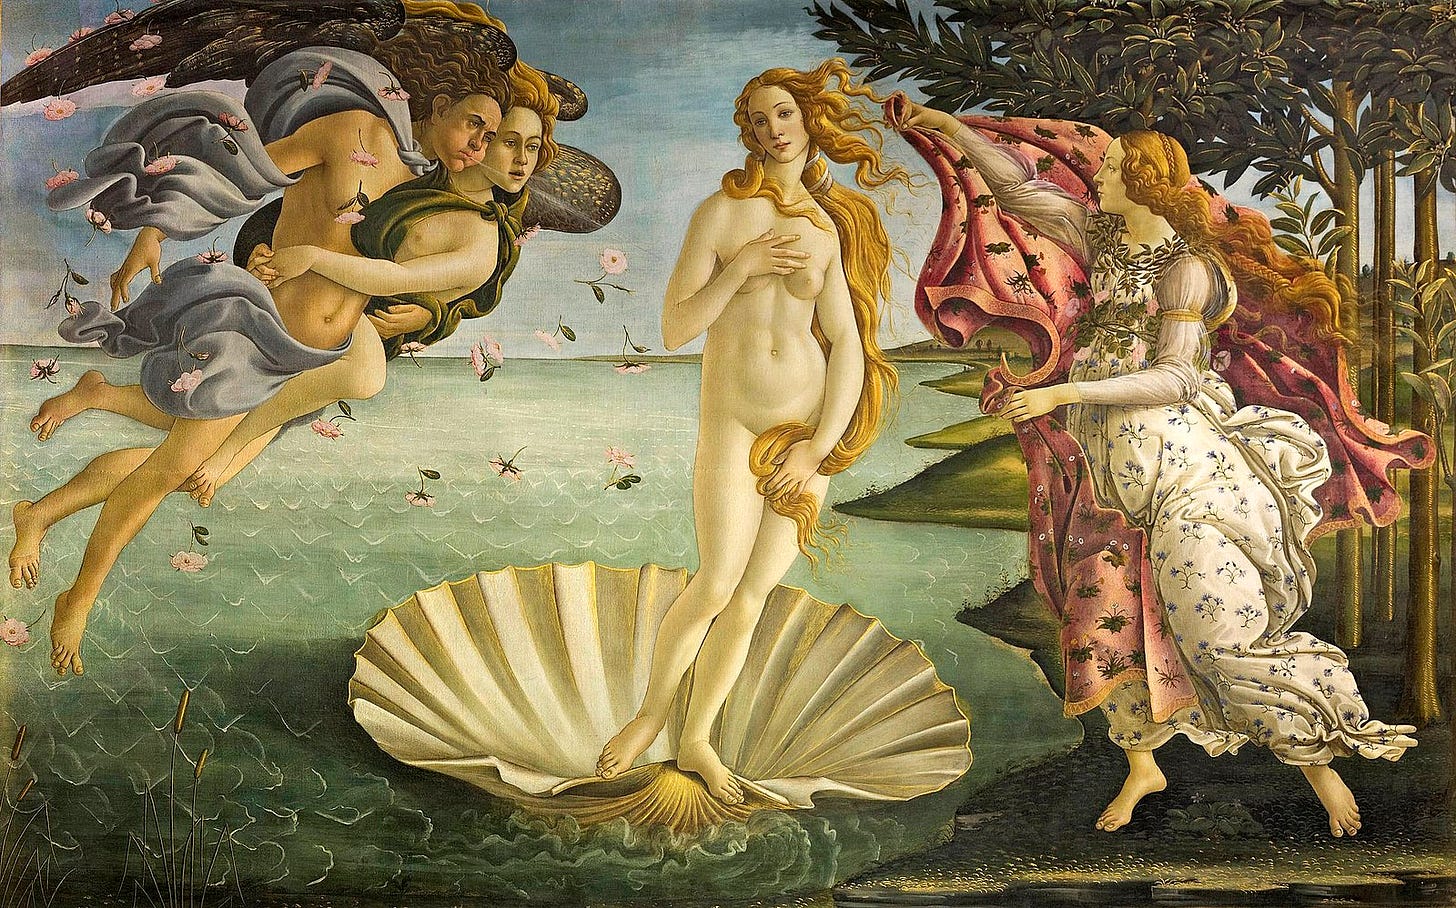 https://pt.wikipedia.org/wiki/Ficheiro:El_nacimiento_de_Venus,_por_Sandro_Botticelli.jpg